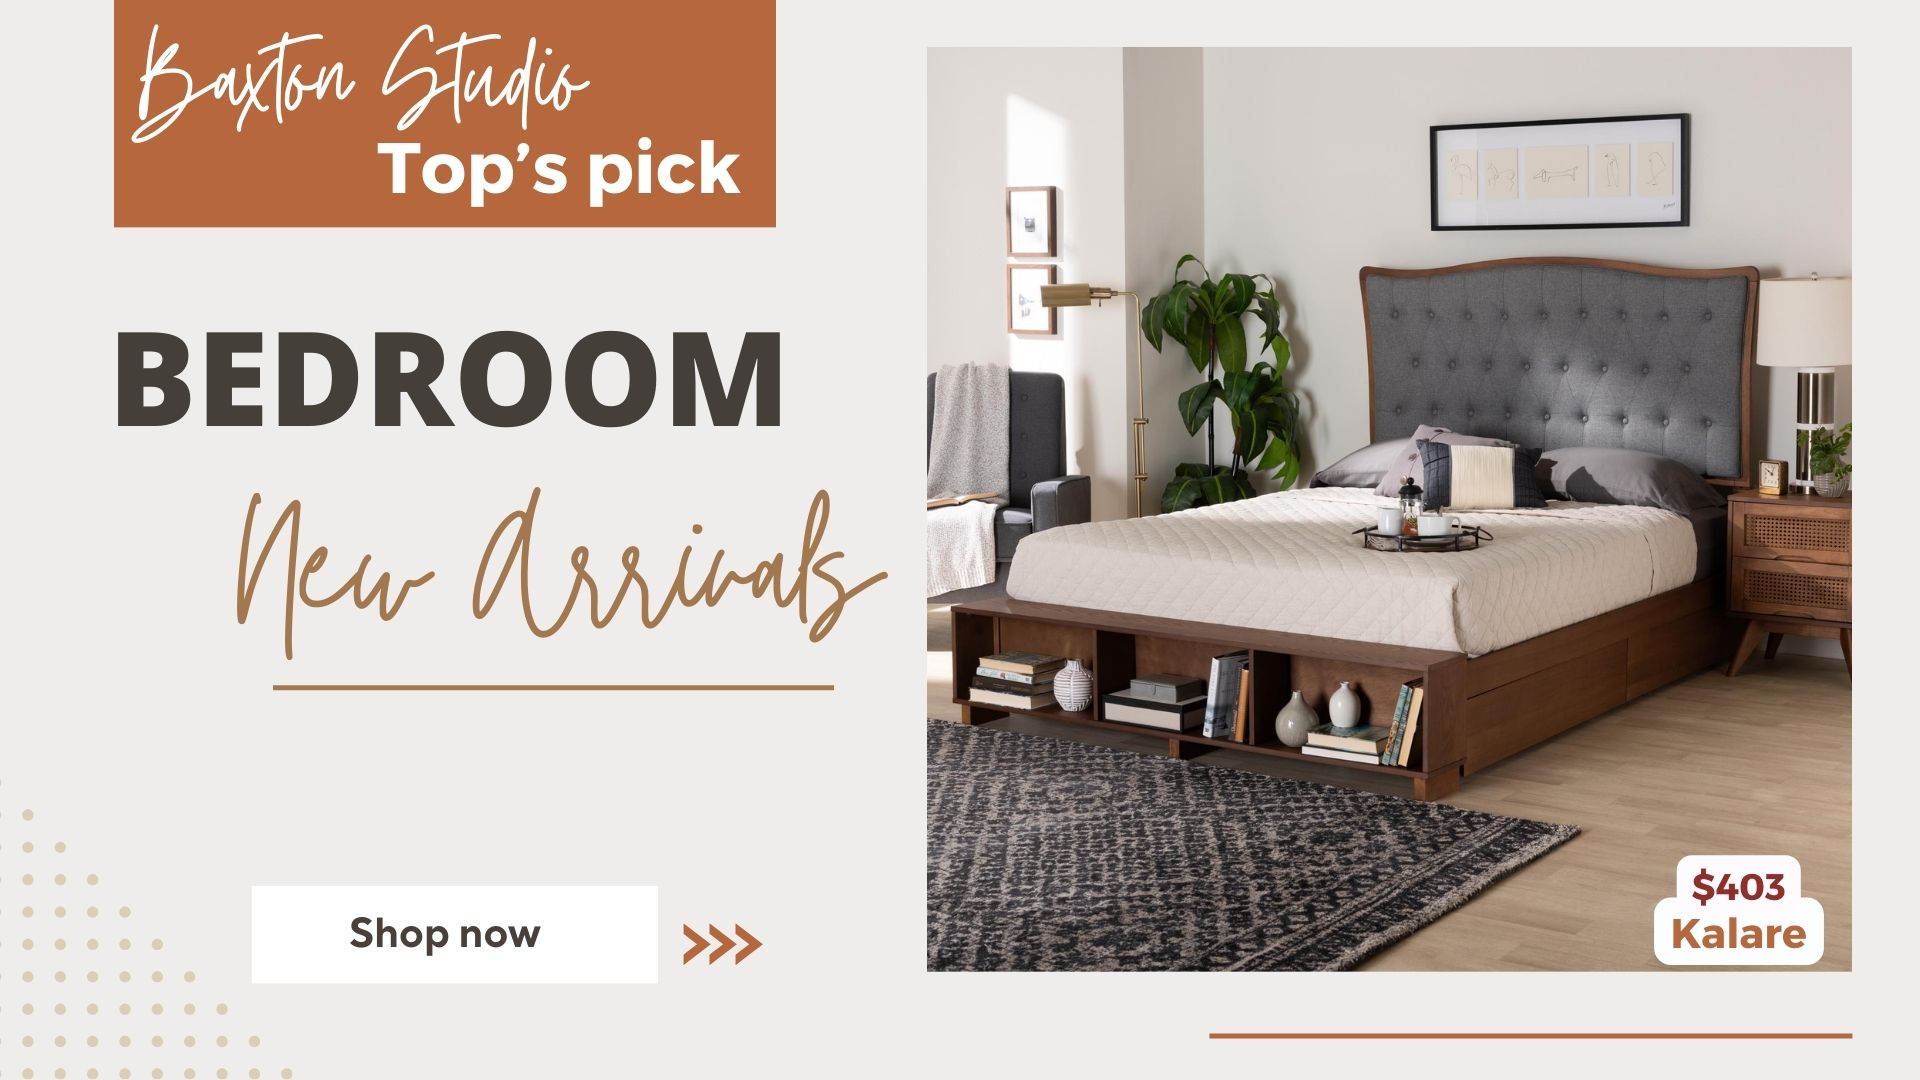 Baxton Studio Top’s pick Bedroom New Arrivals Kalare $403